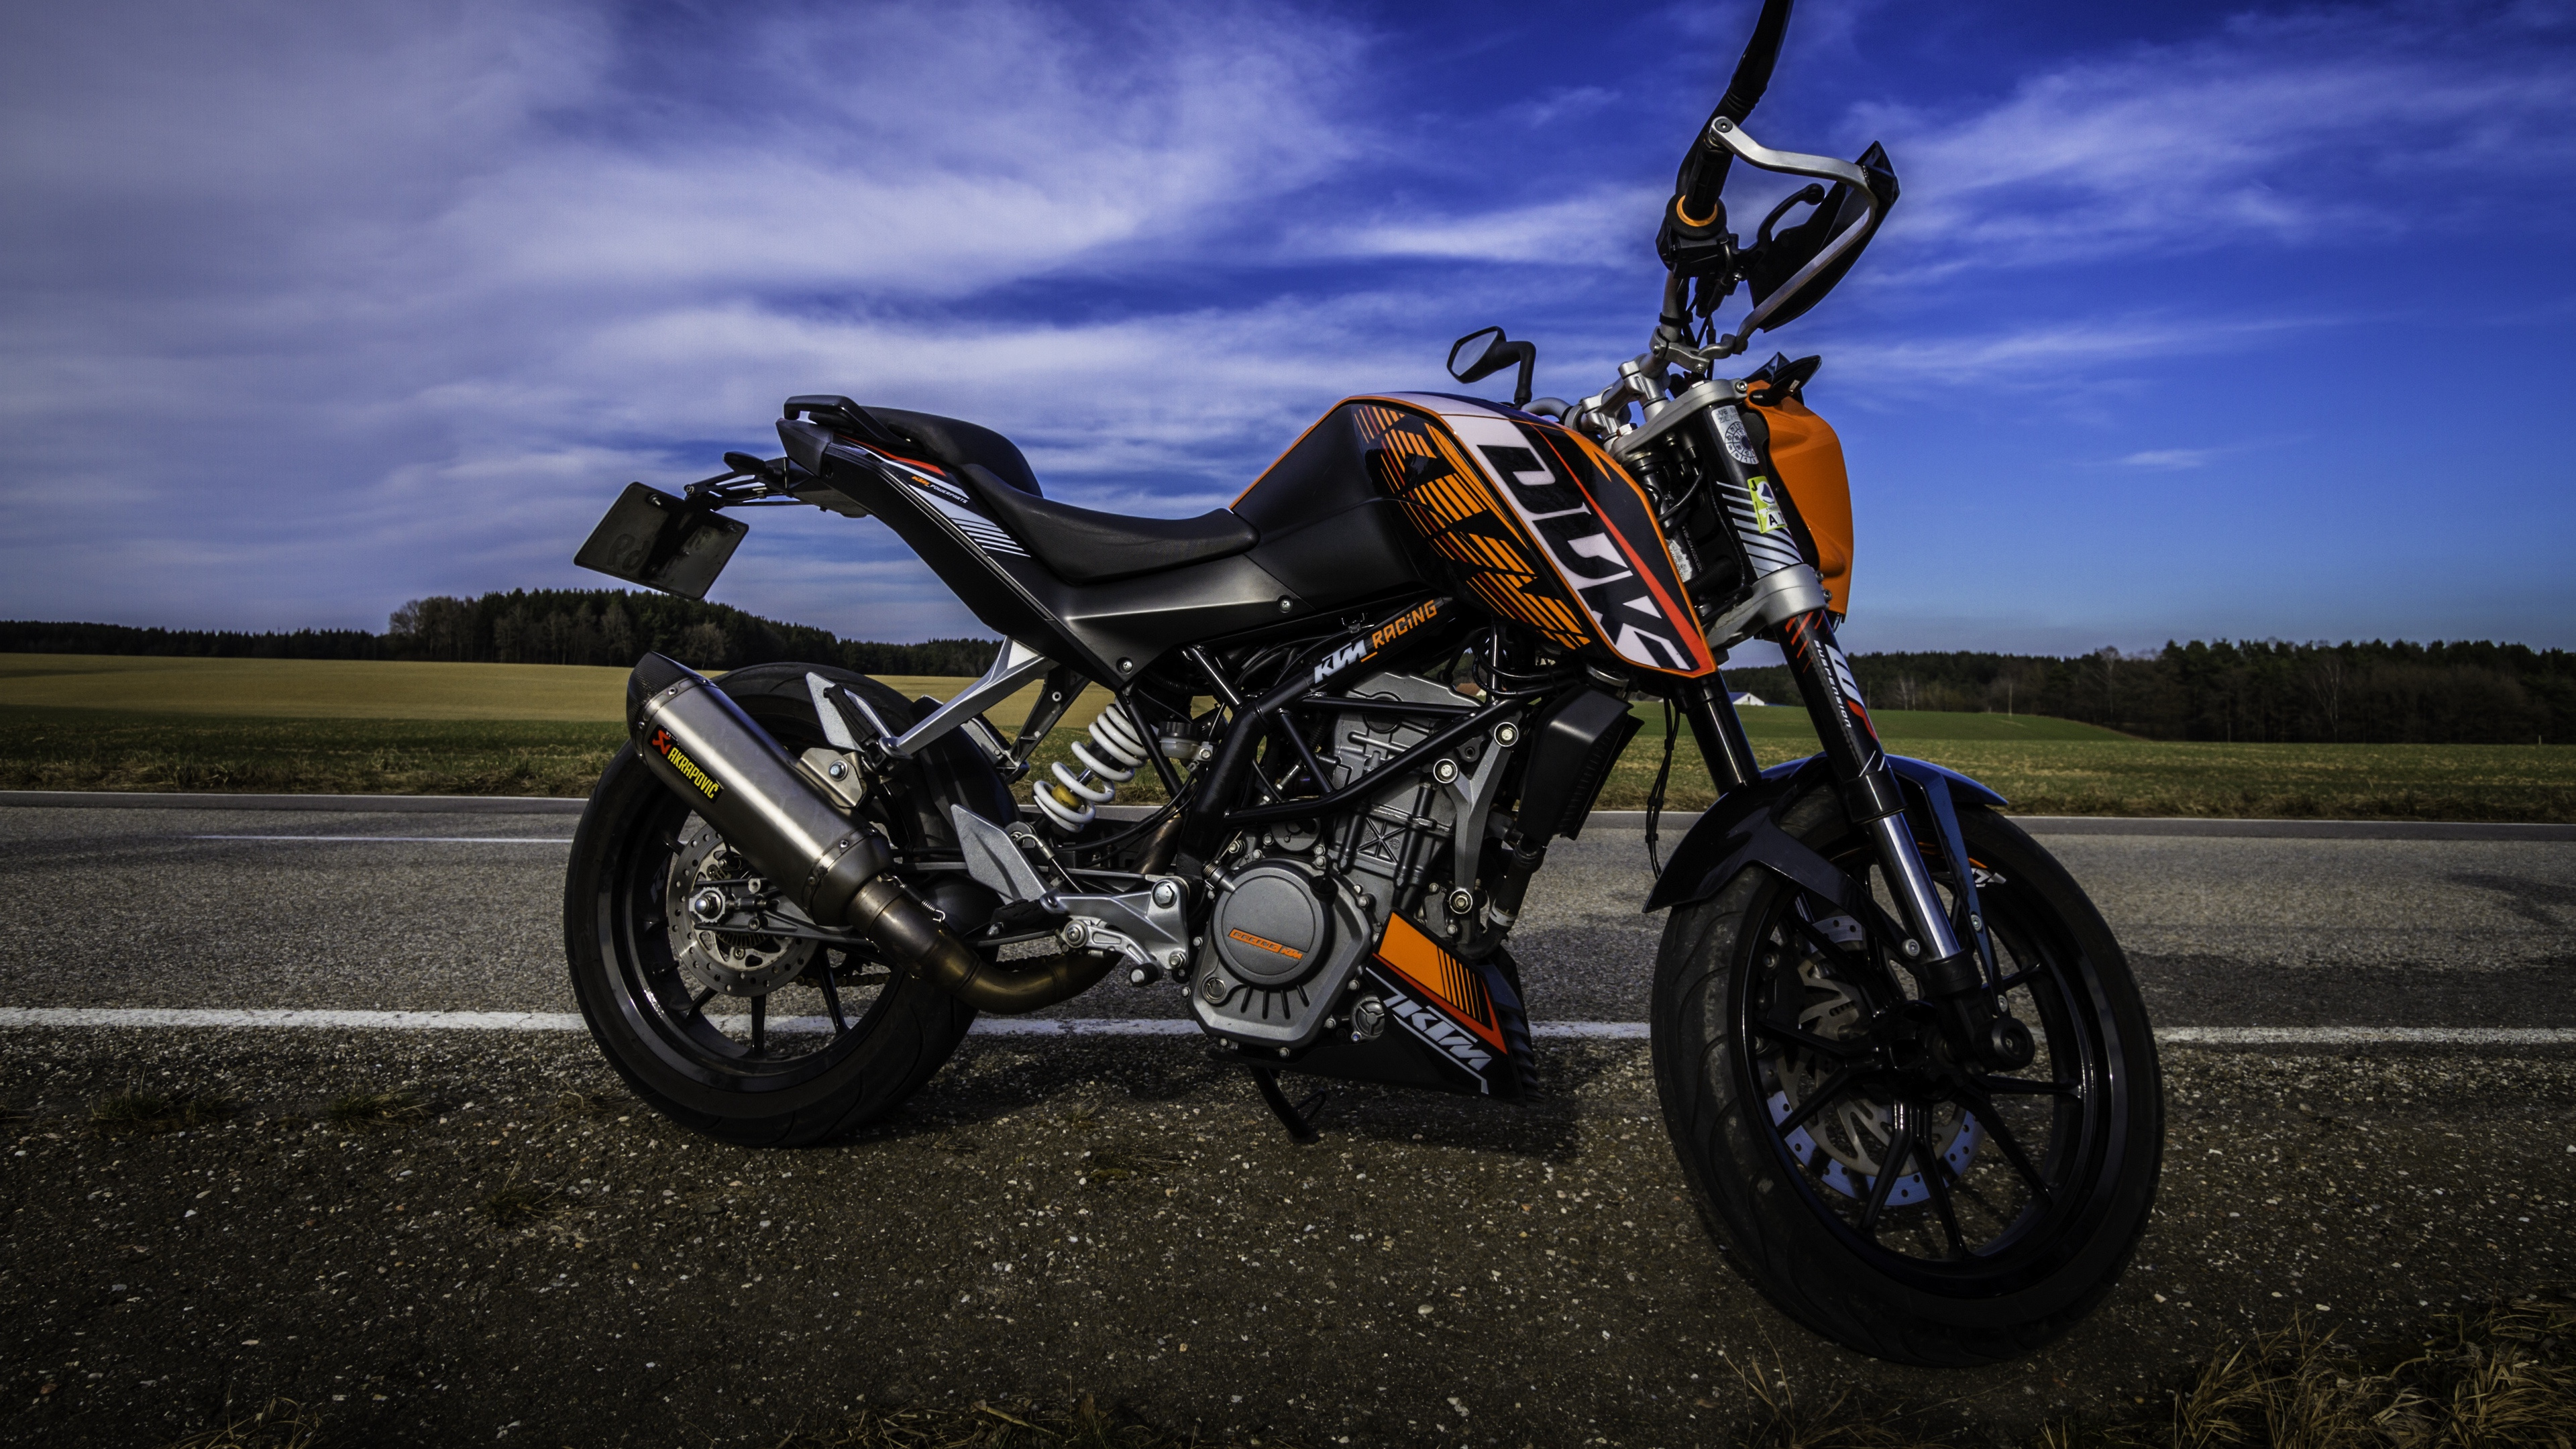 Orange and Black Motorcycle on Black Asphalt Road. Wallpaper in 3840x2160 Resolution